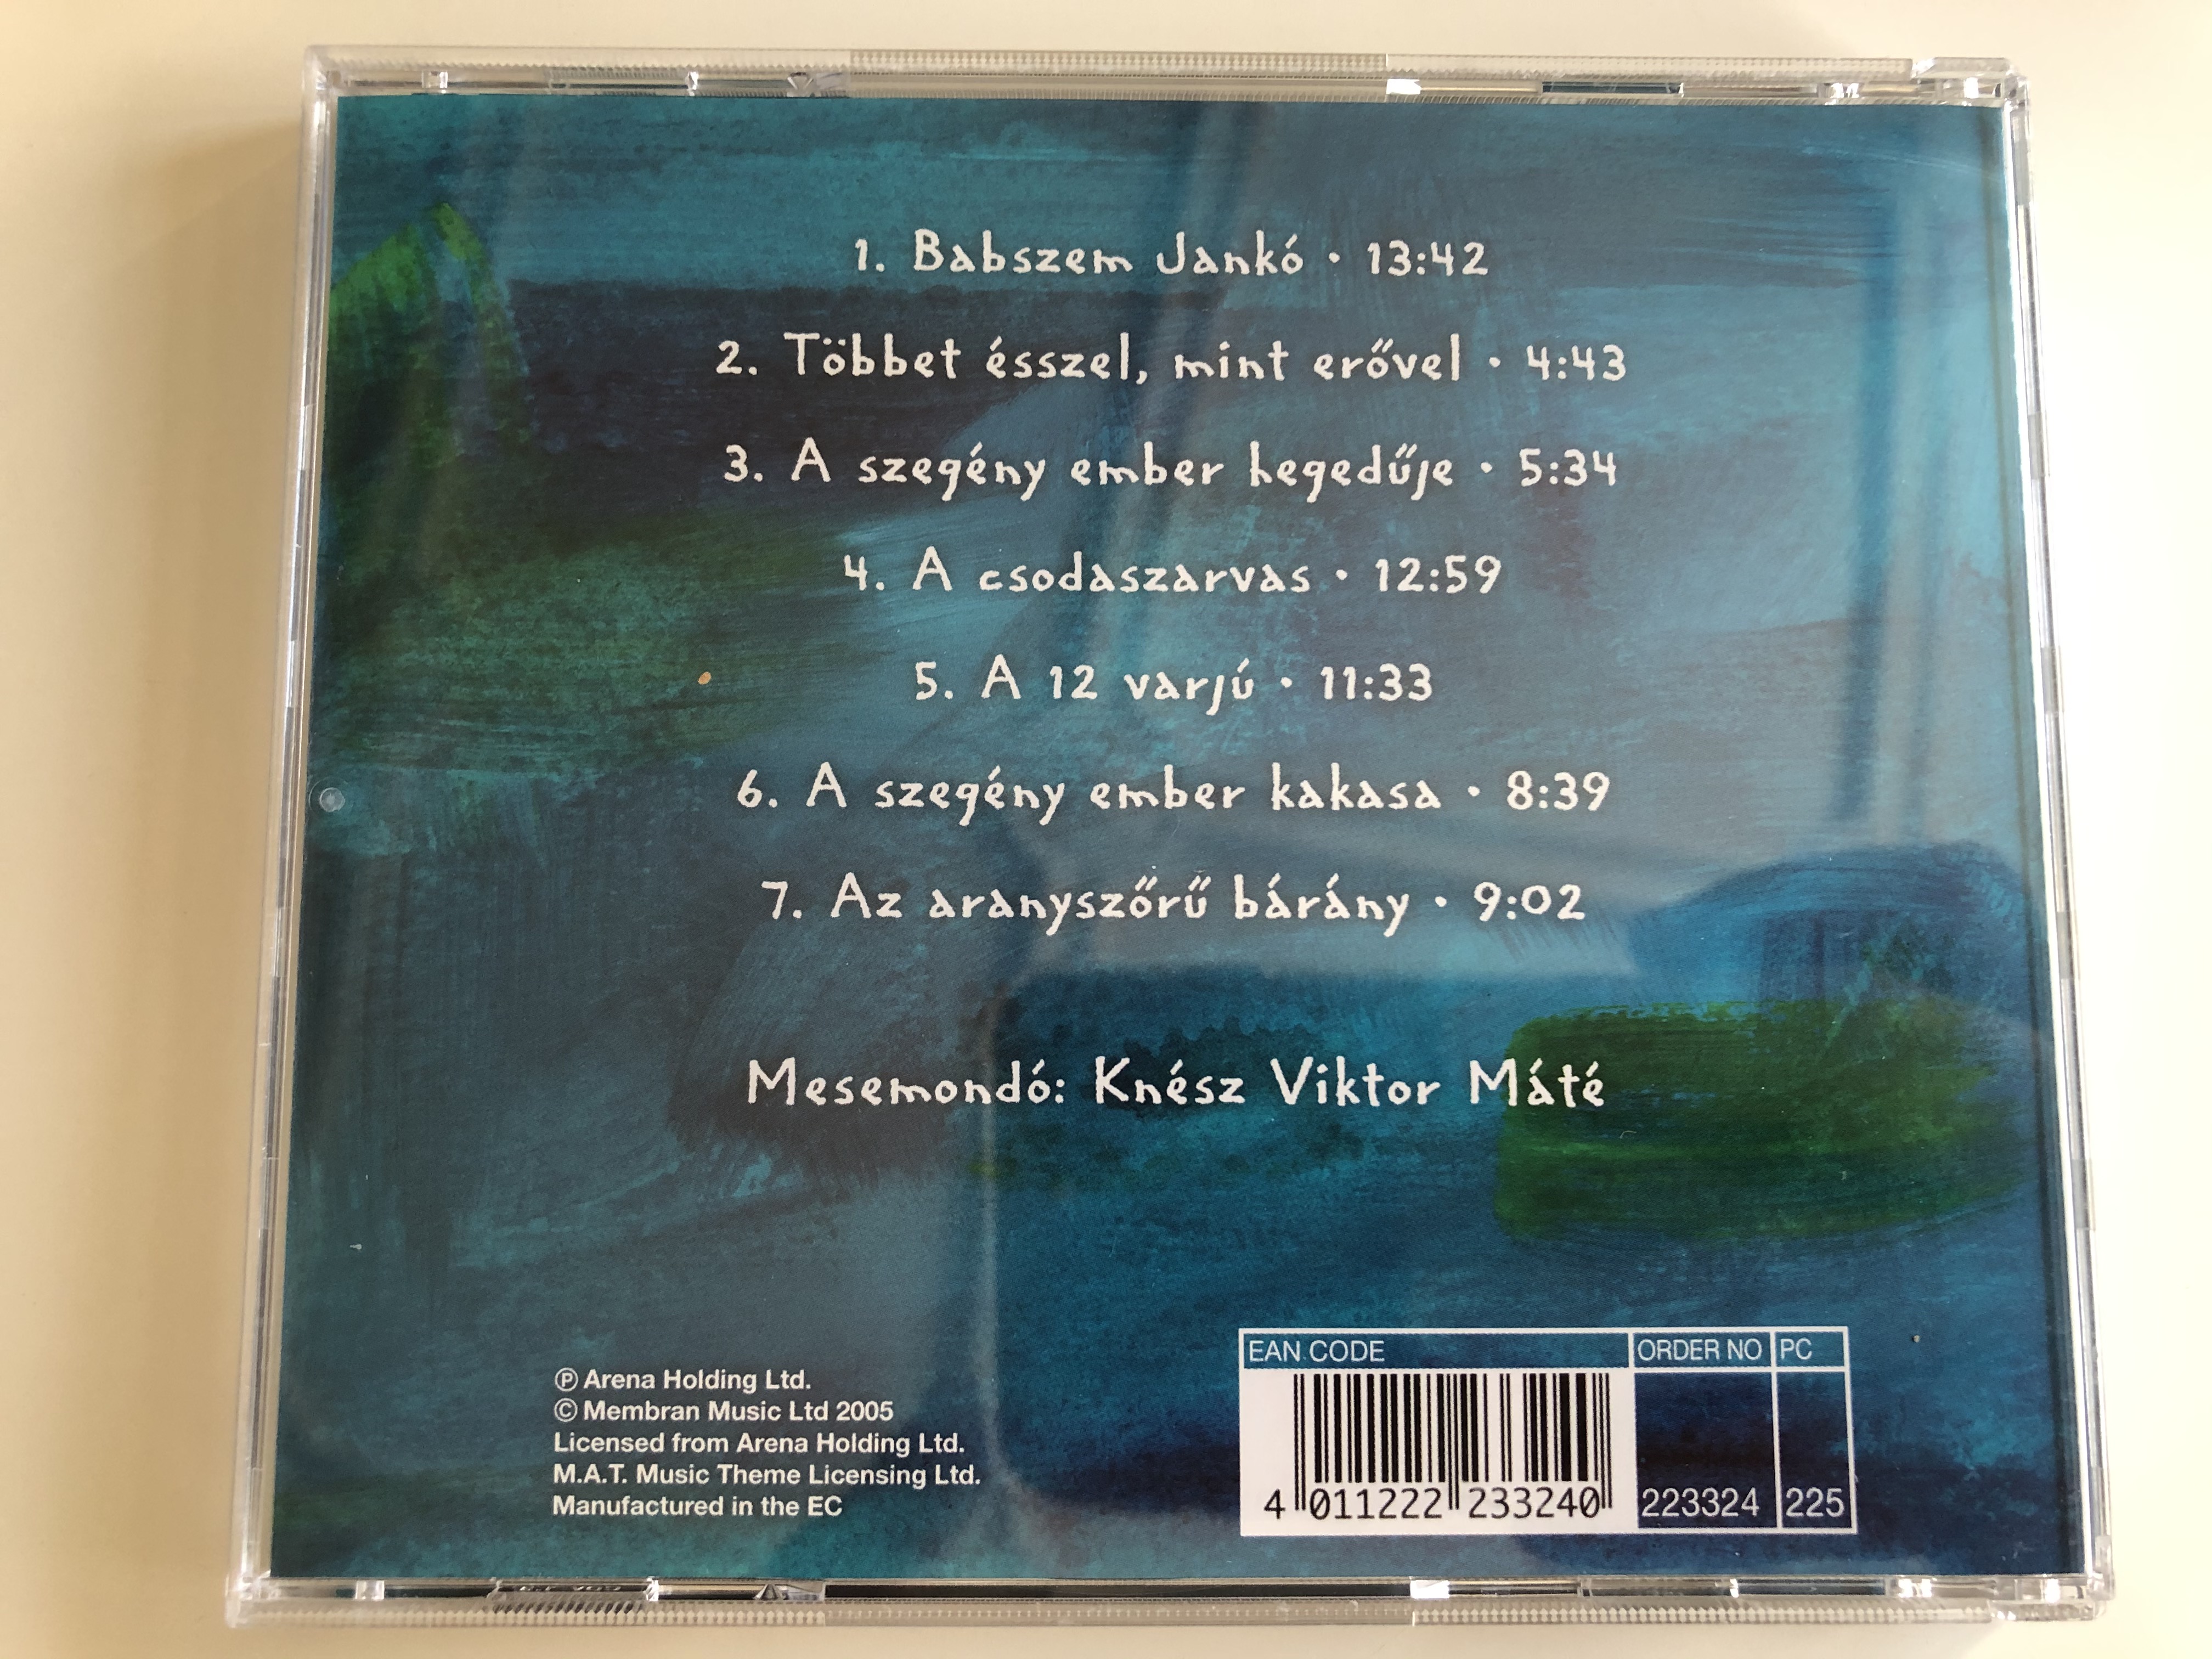 babszem-janko-benedek-elek-mesei-membran-music-audio-cd-2005-4011222233240-4-.jpg